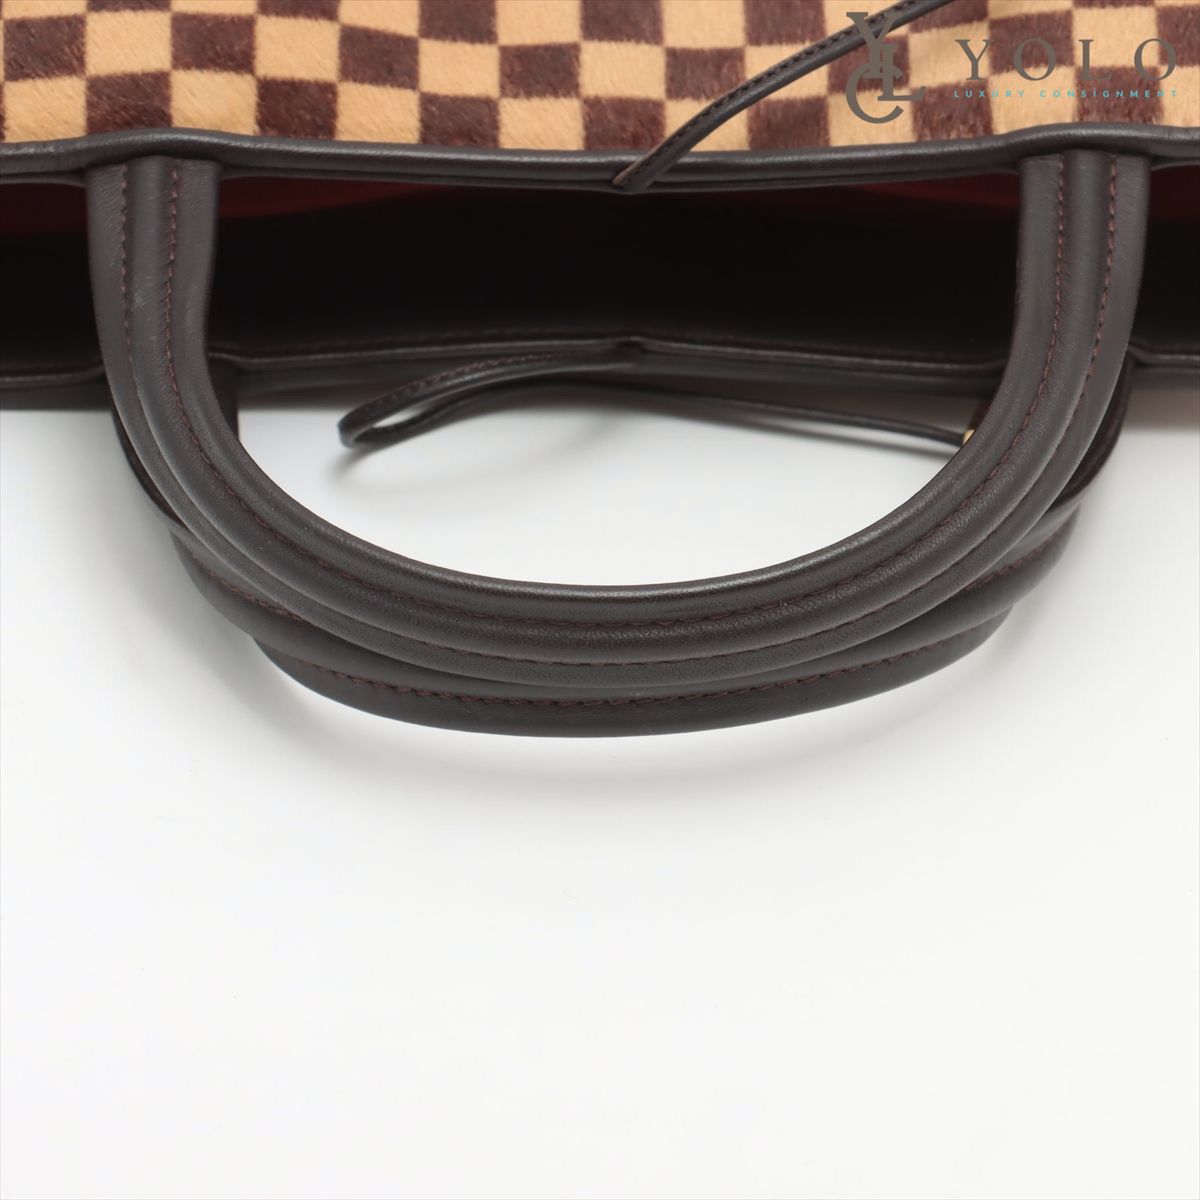 Authentic Louis Vuitton Damier Sauvage Impala Fur Type Leather Bag